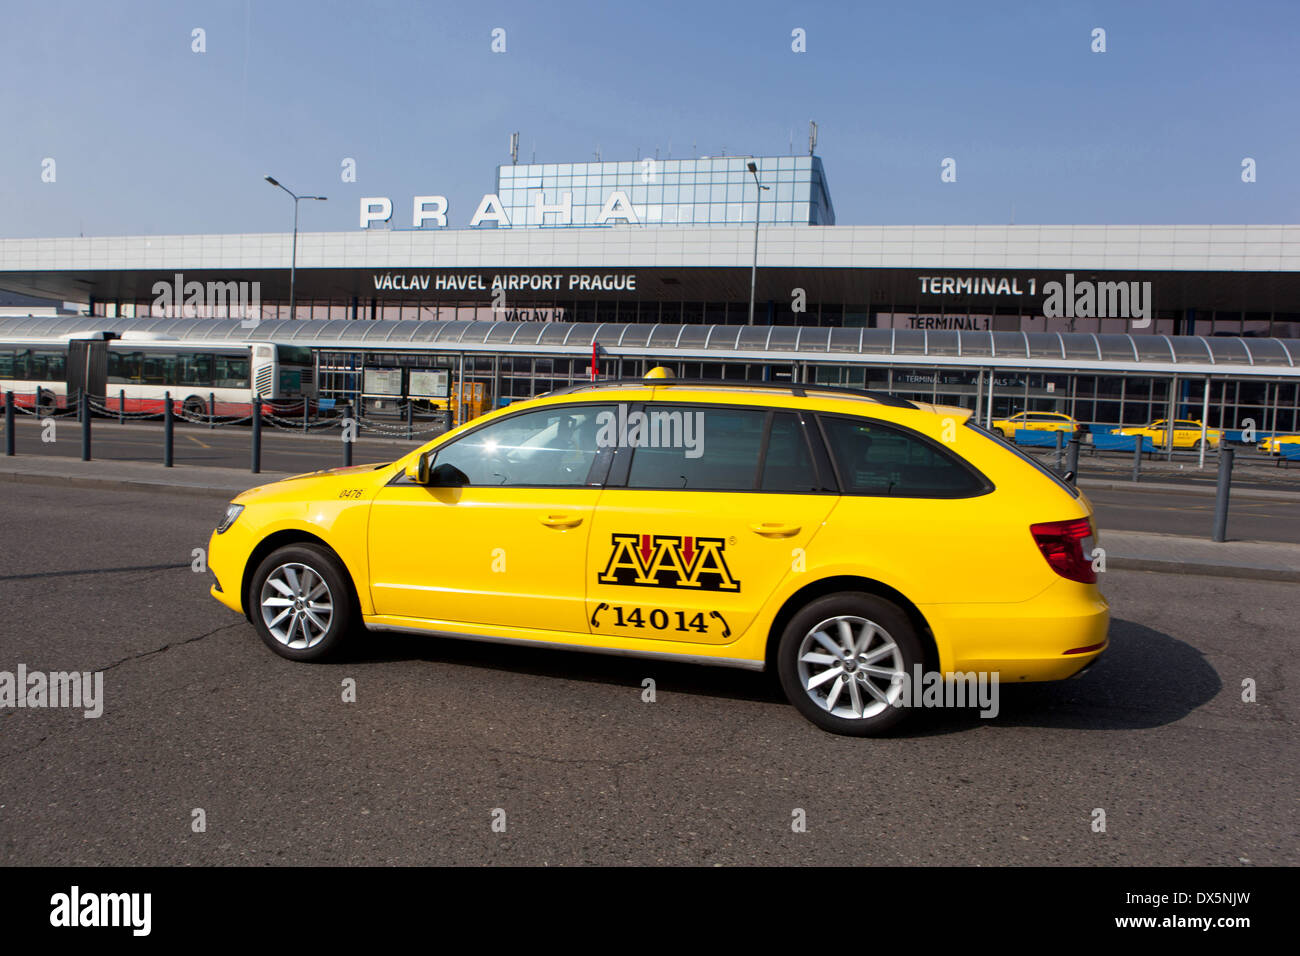 Taxi, cab, car on Airport, Ruzyne, Prague, Czech Republic Stock Photo